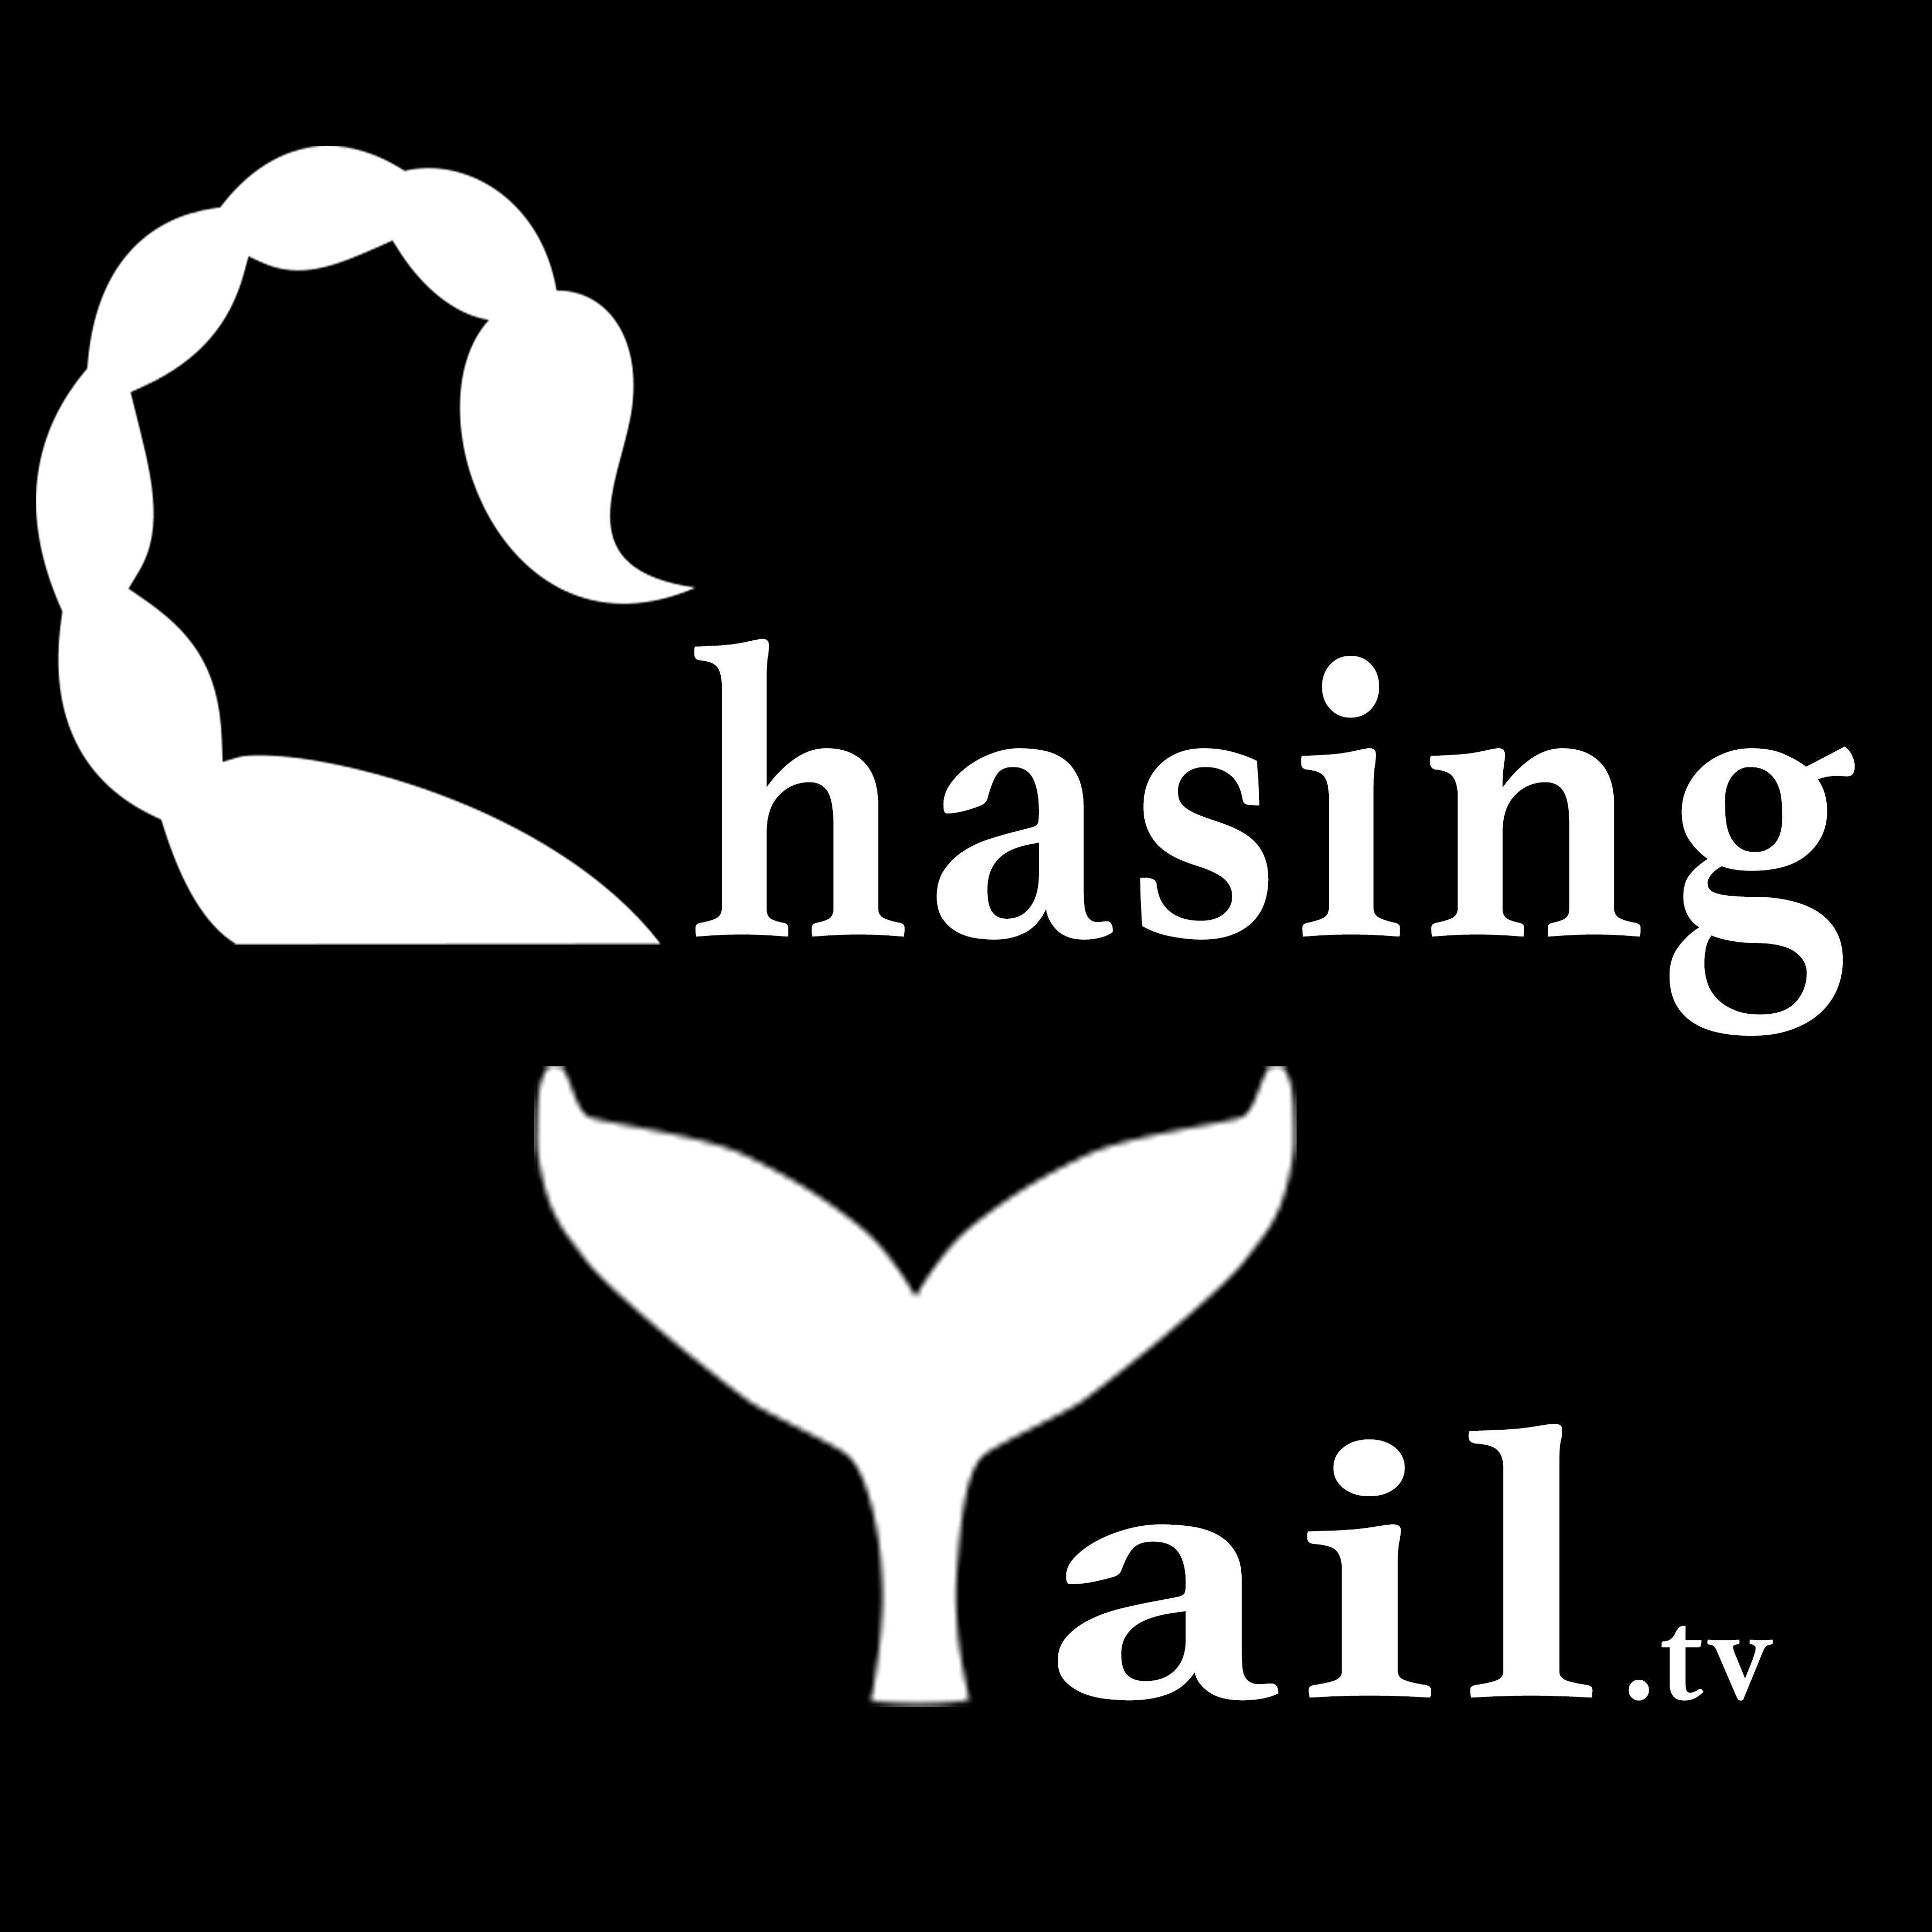 Chasing Logo - chasing tails square logo - Blue Wilderness